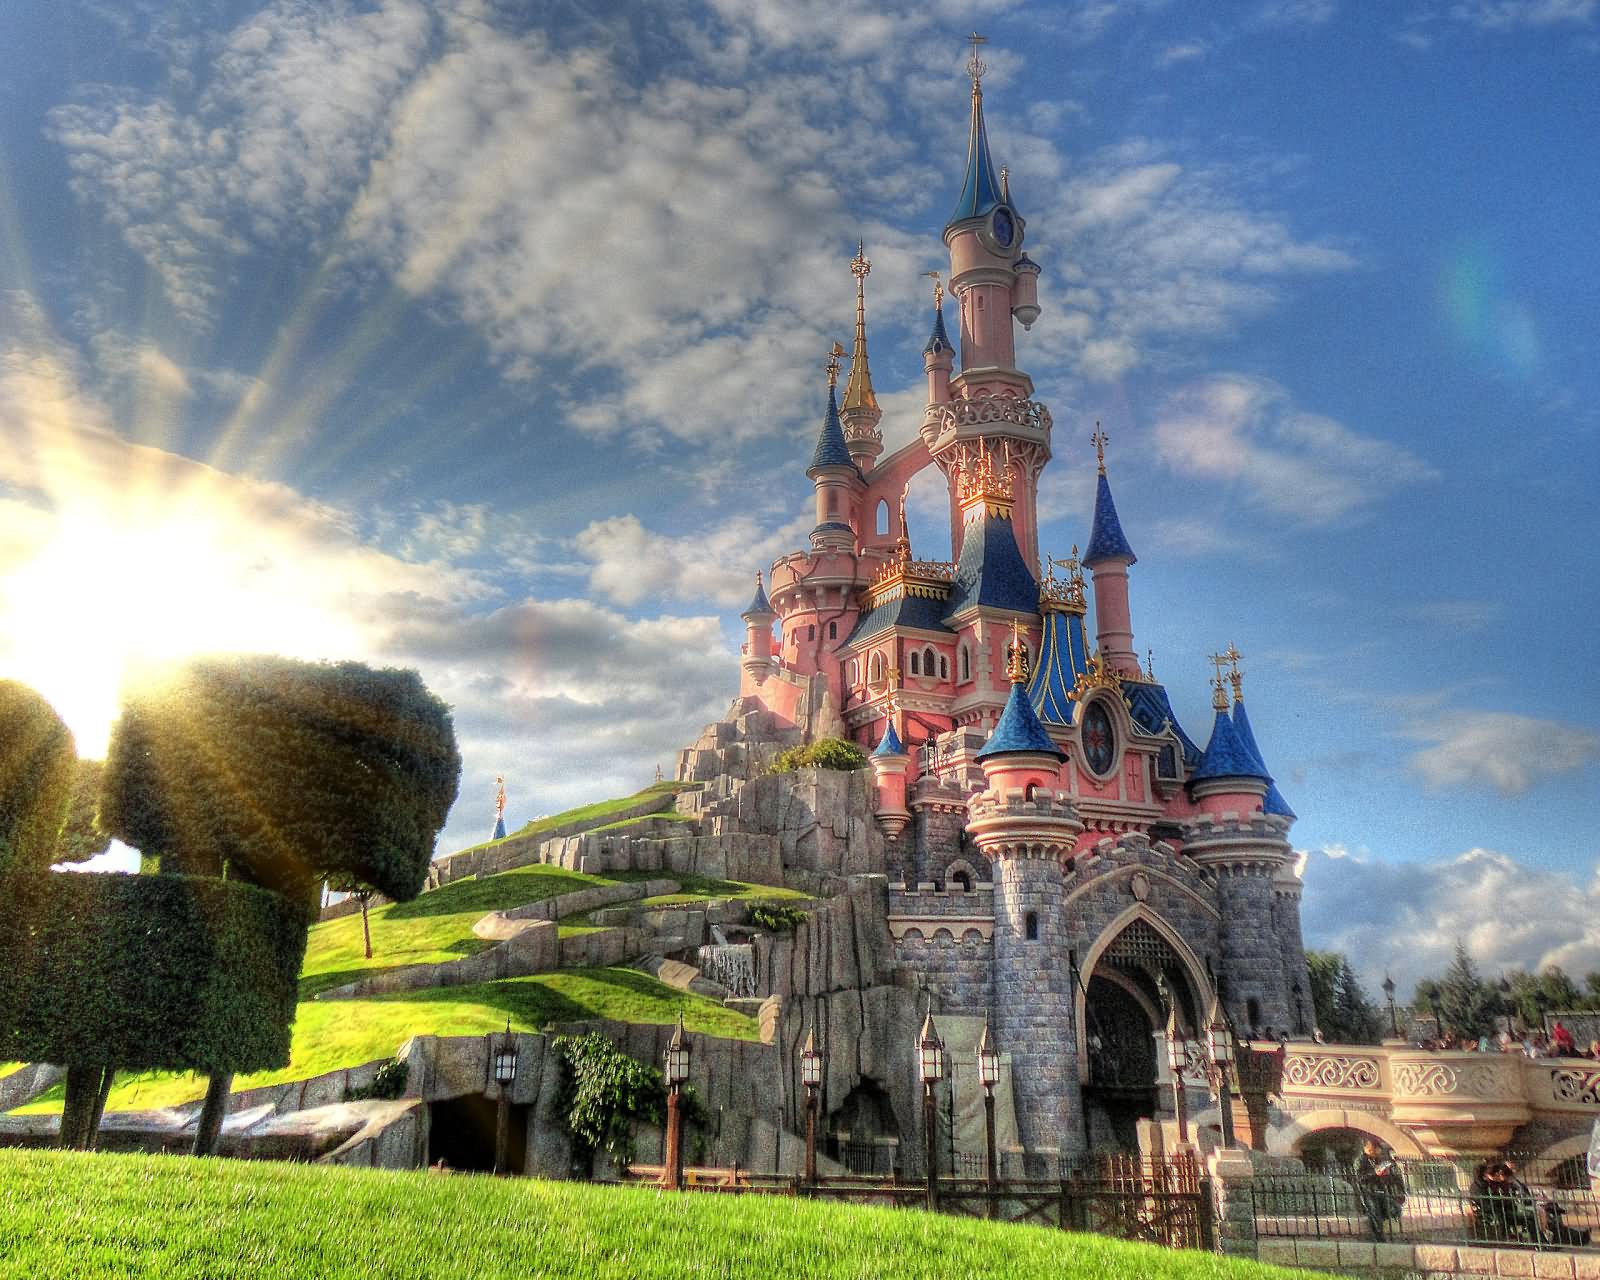 Beautiful-Disneyland-Paris-Castle-Image.jpg